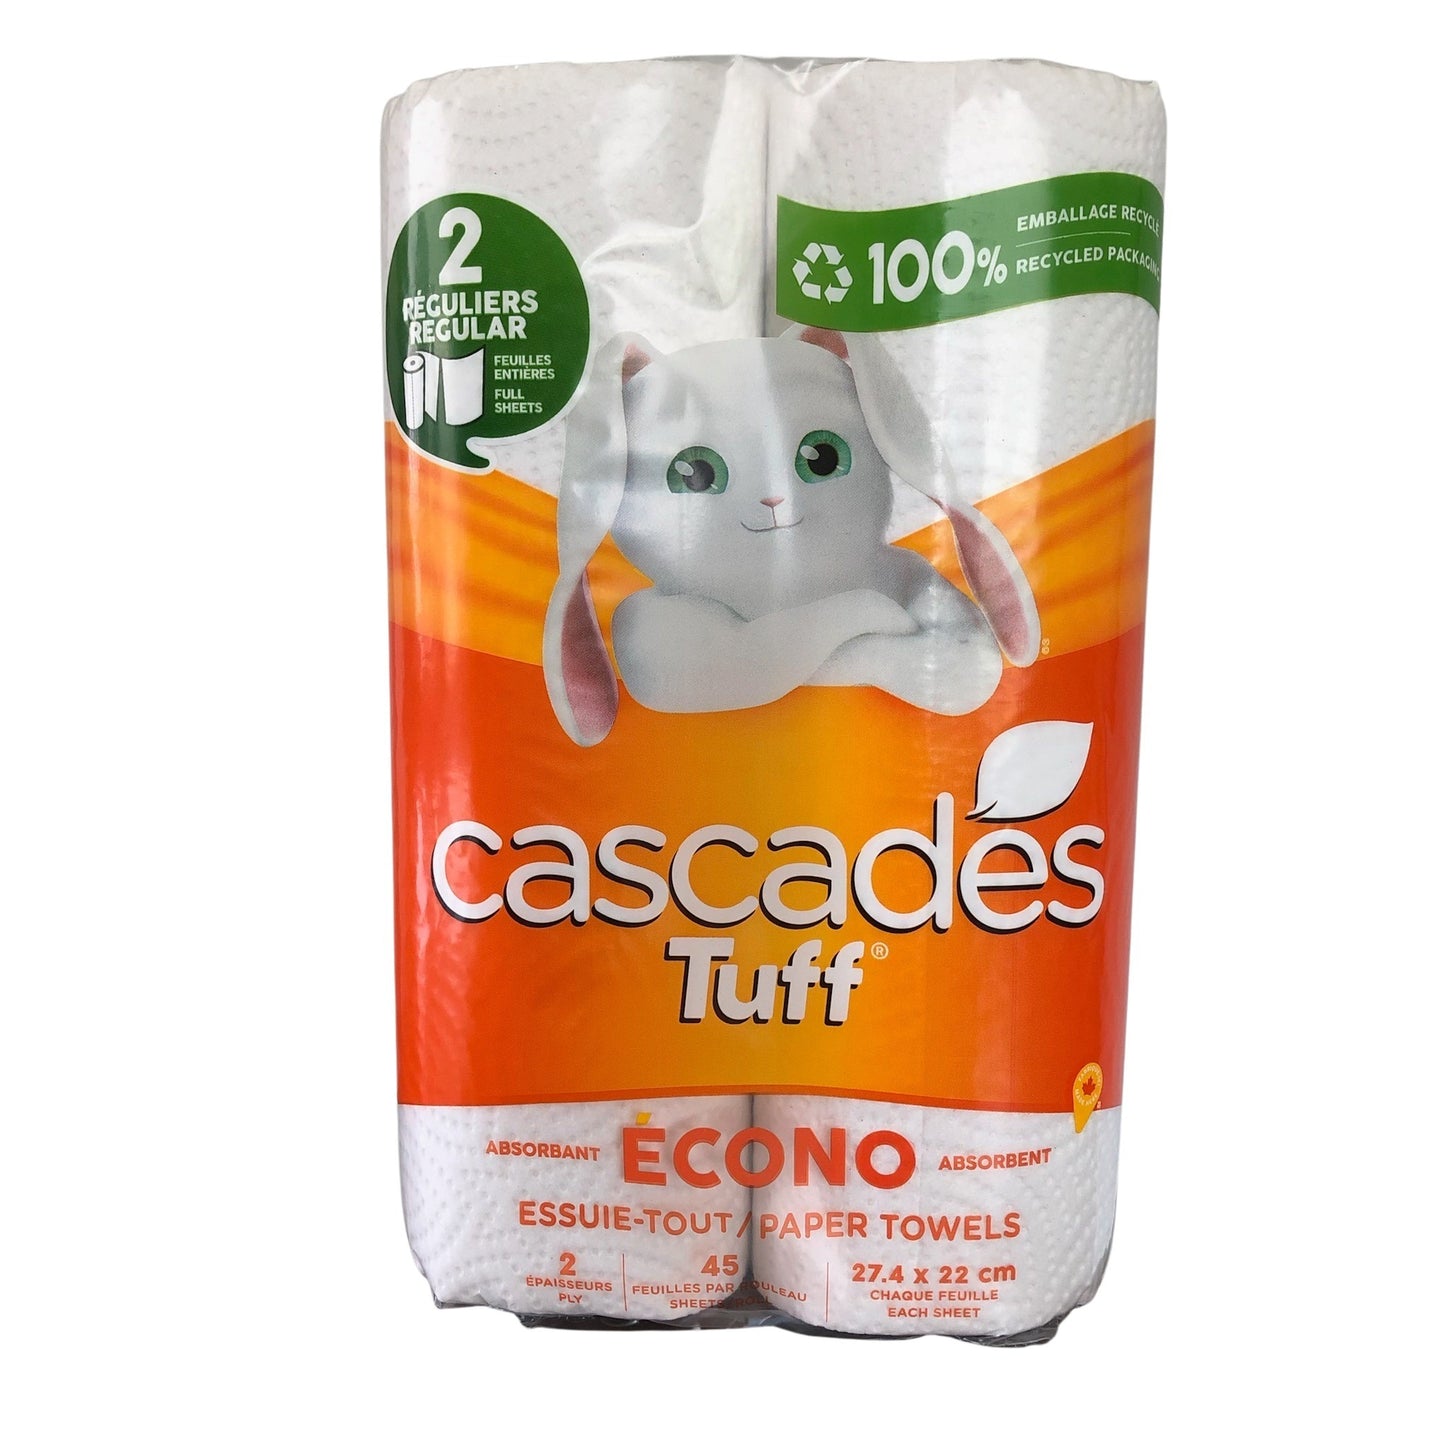 Cascades Tuff Econo Paper Towel 1 bundle